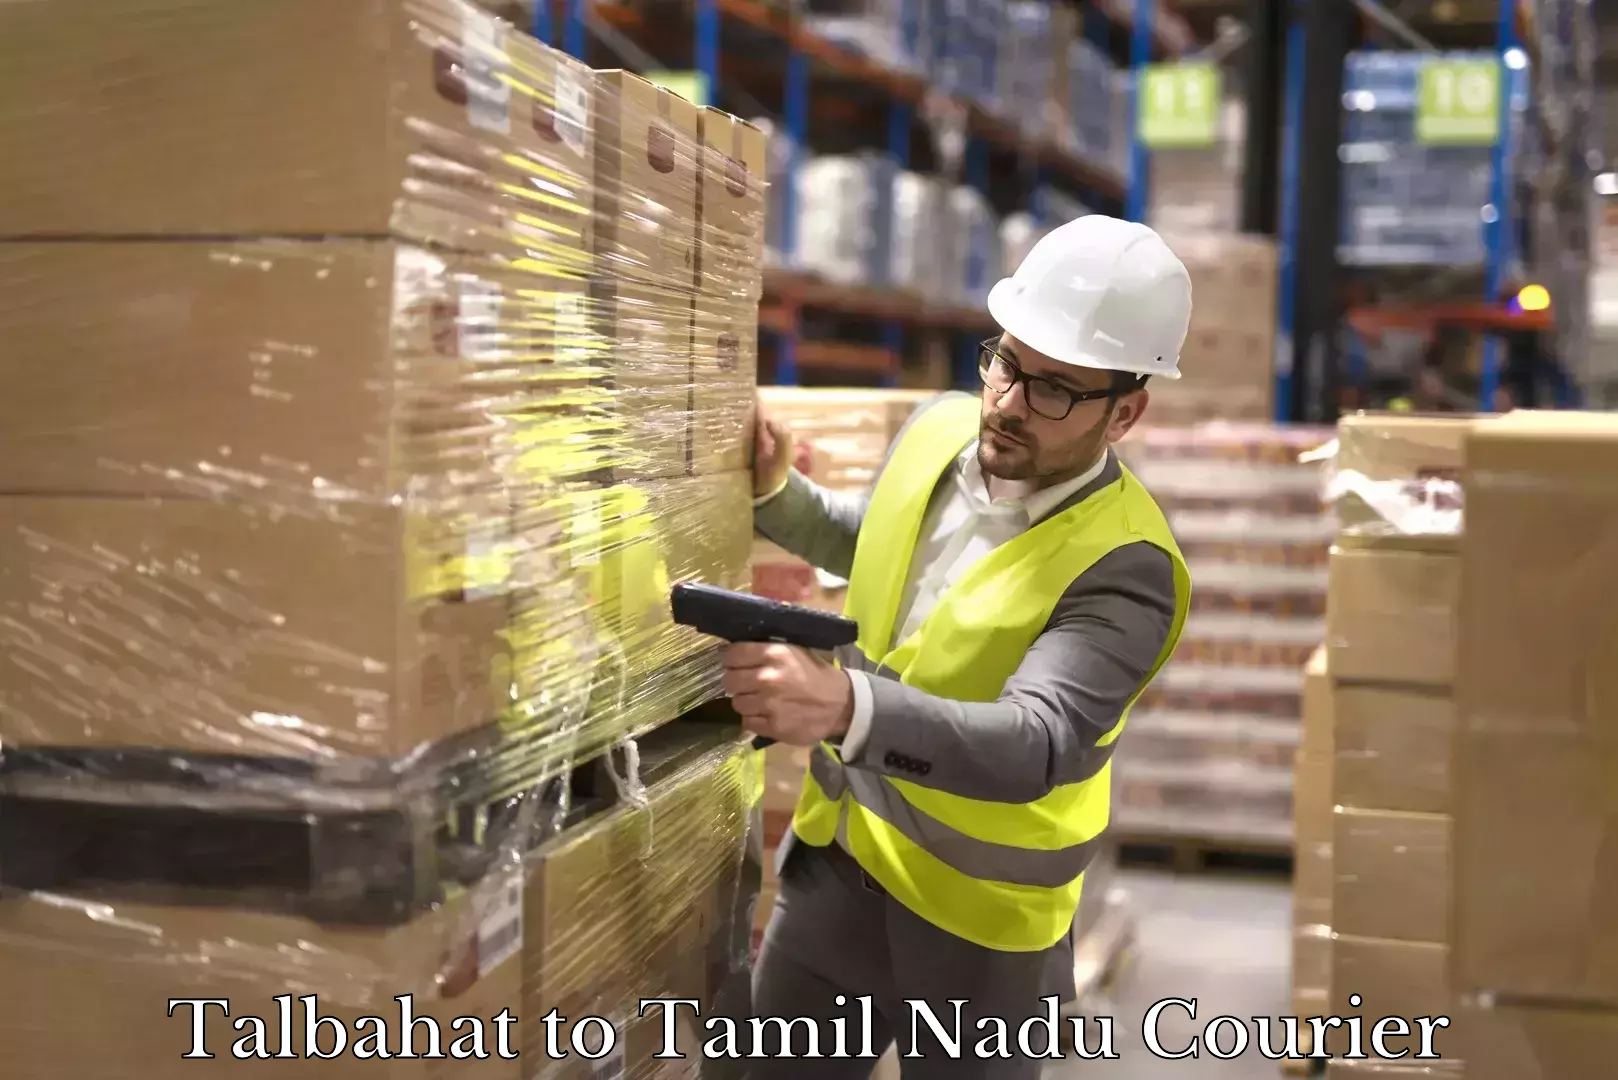 Efficient logistics management Talbahat to Tamil Nadu